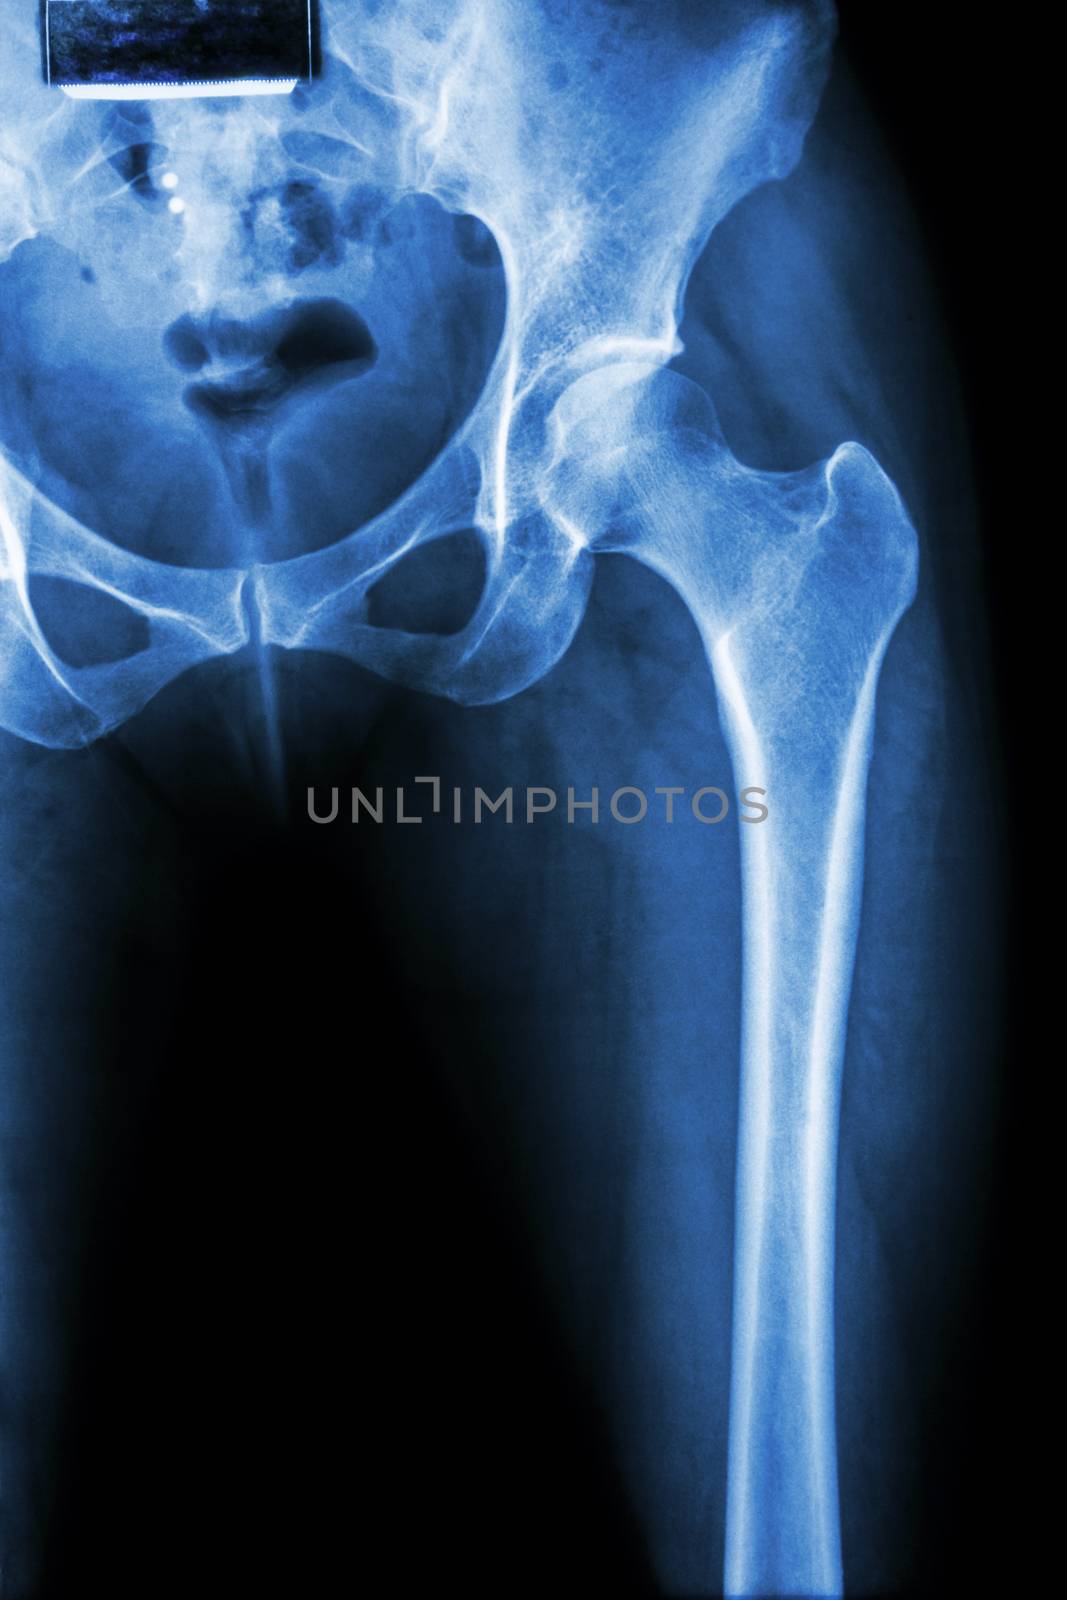 normal pelvis & hip joint by stockdevil